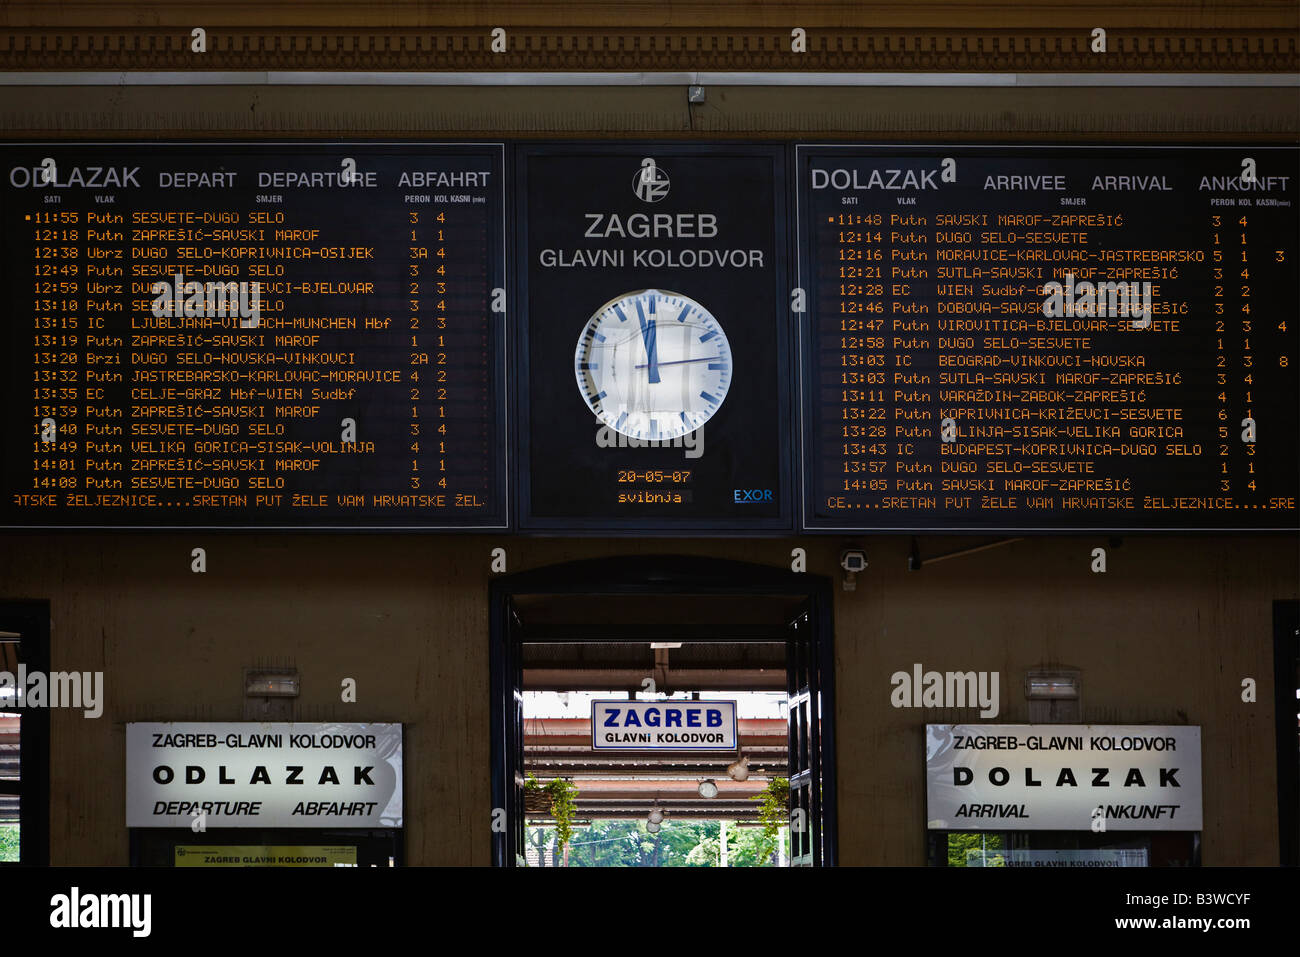 Clock and train schedule, Glavni Koldvor the main station in Zagreb, Croatia Stock Photo